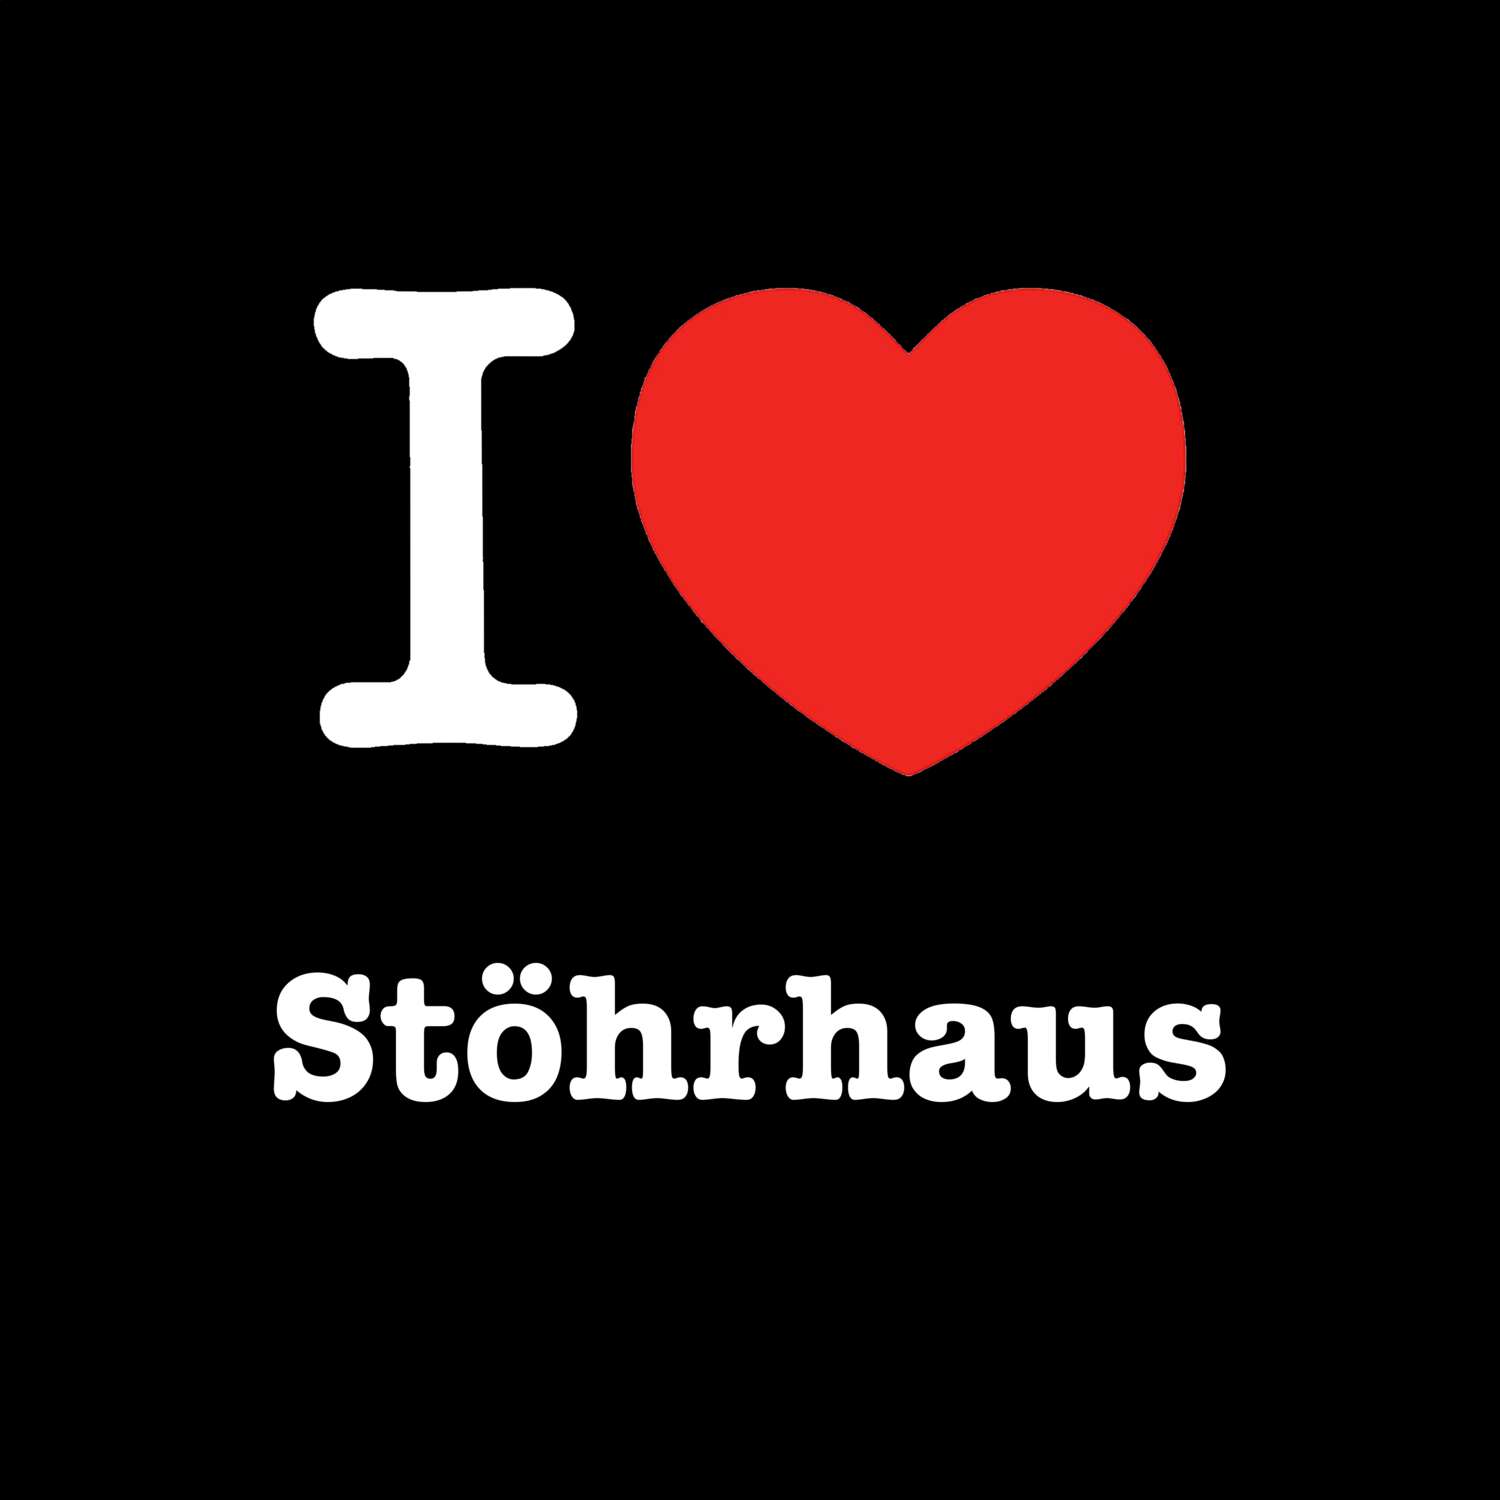 Stöhrhaus T-Shirt »I love«